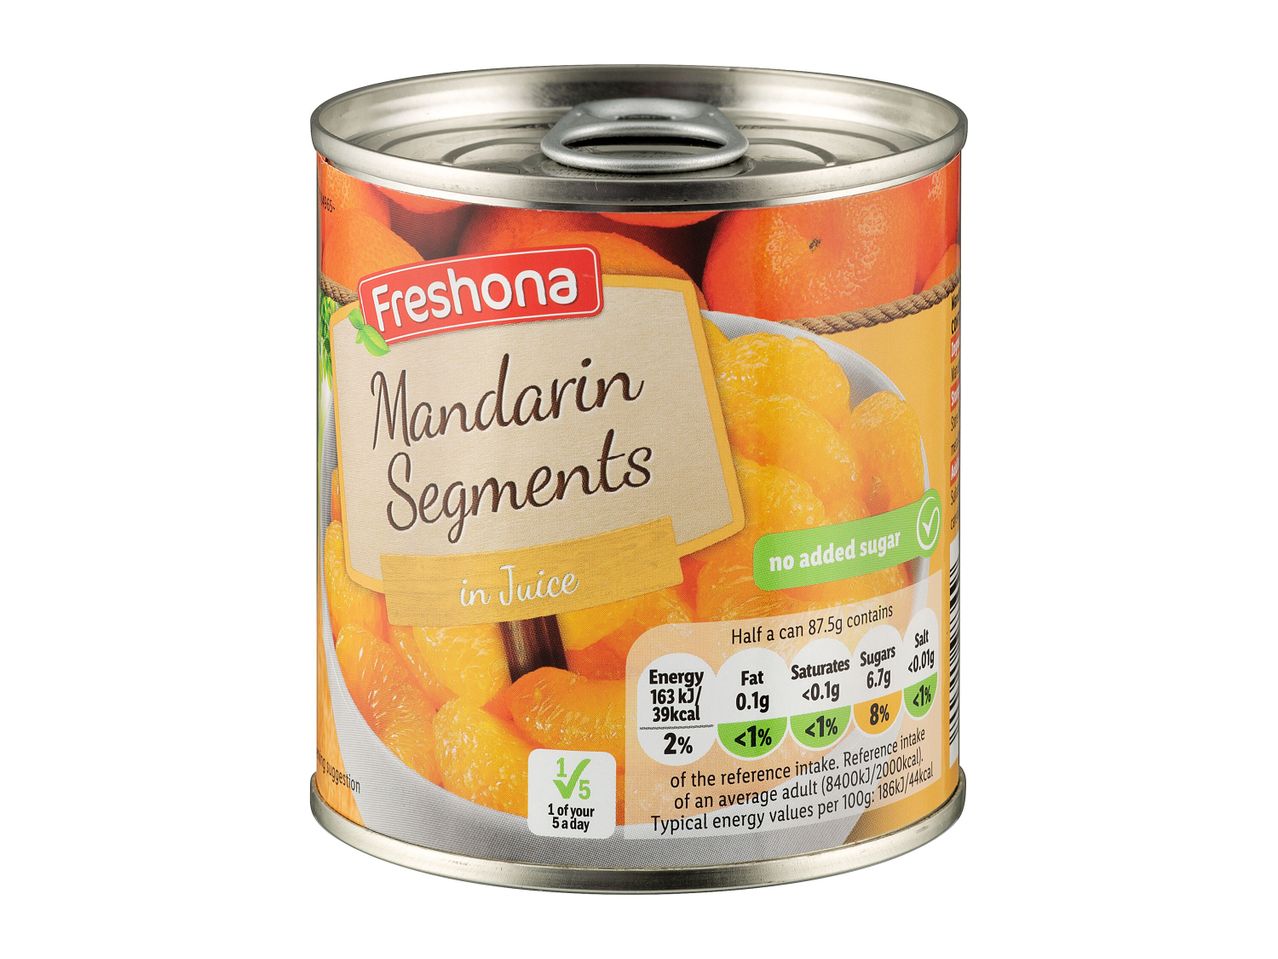 Go to full screen view: Freshona Mandarin Segments in Juice - Image 1